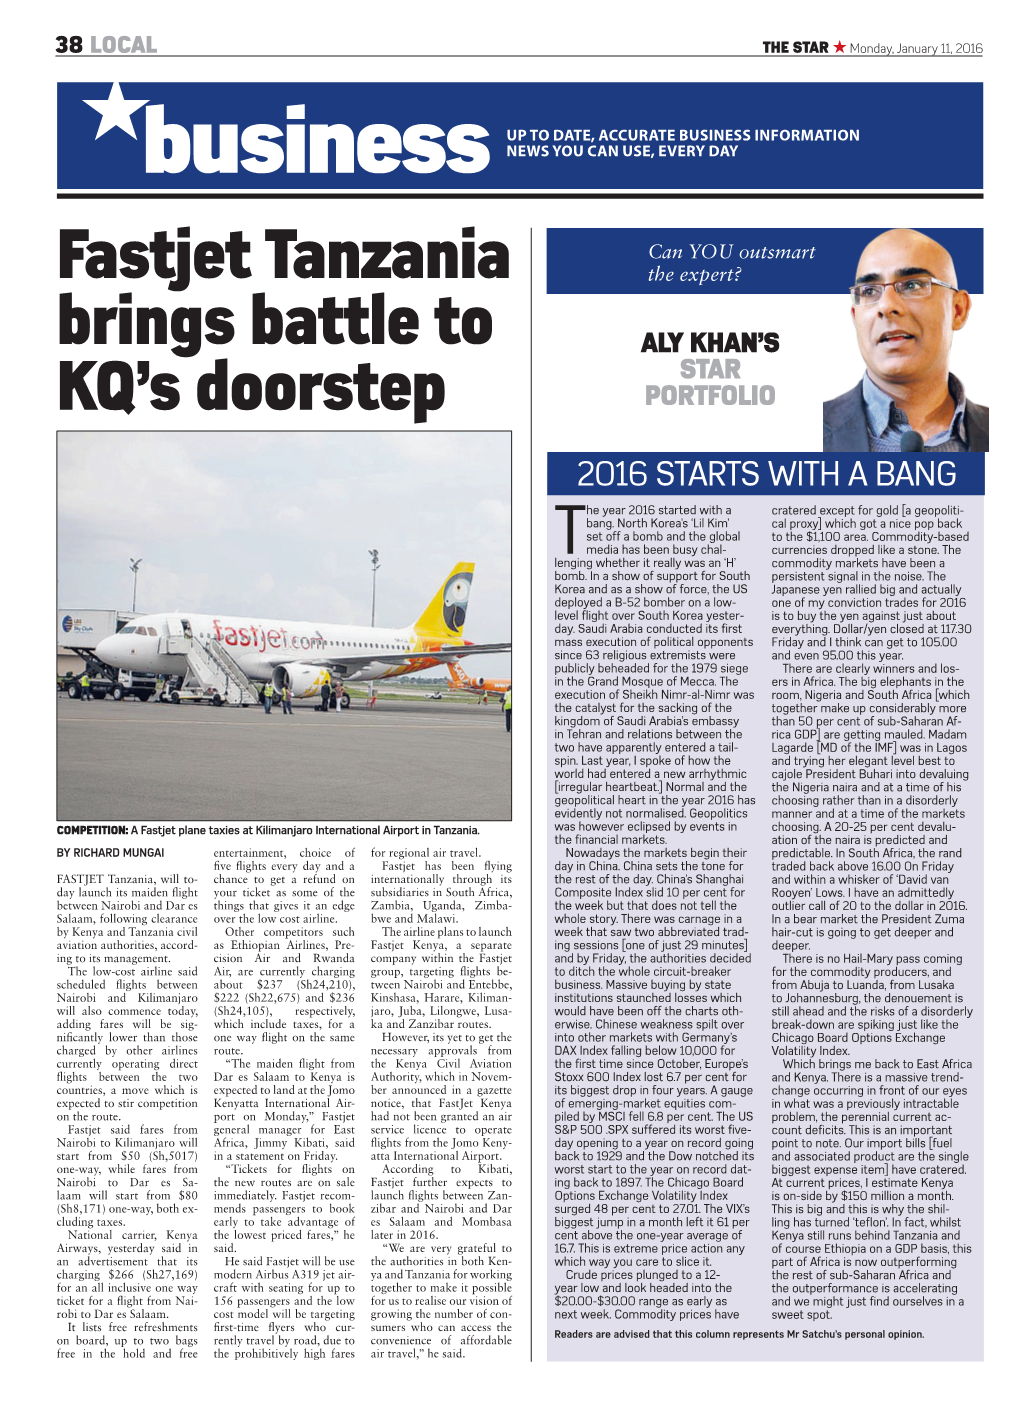 Fastjet Tanzania Brings Battle to KQ's Doorstep